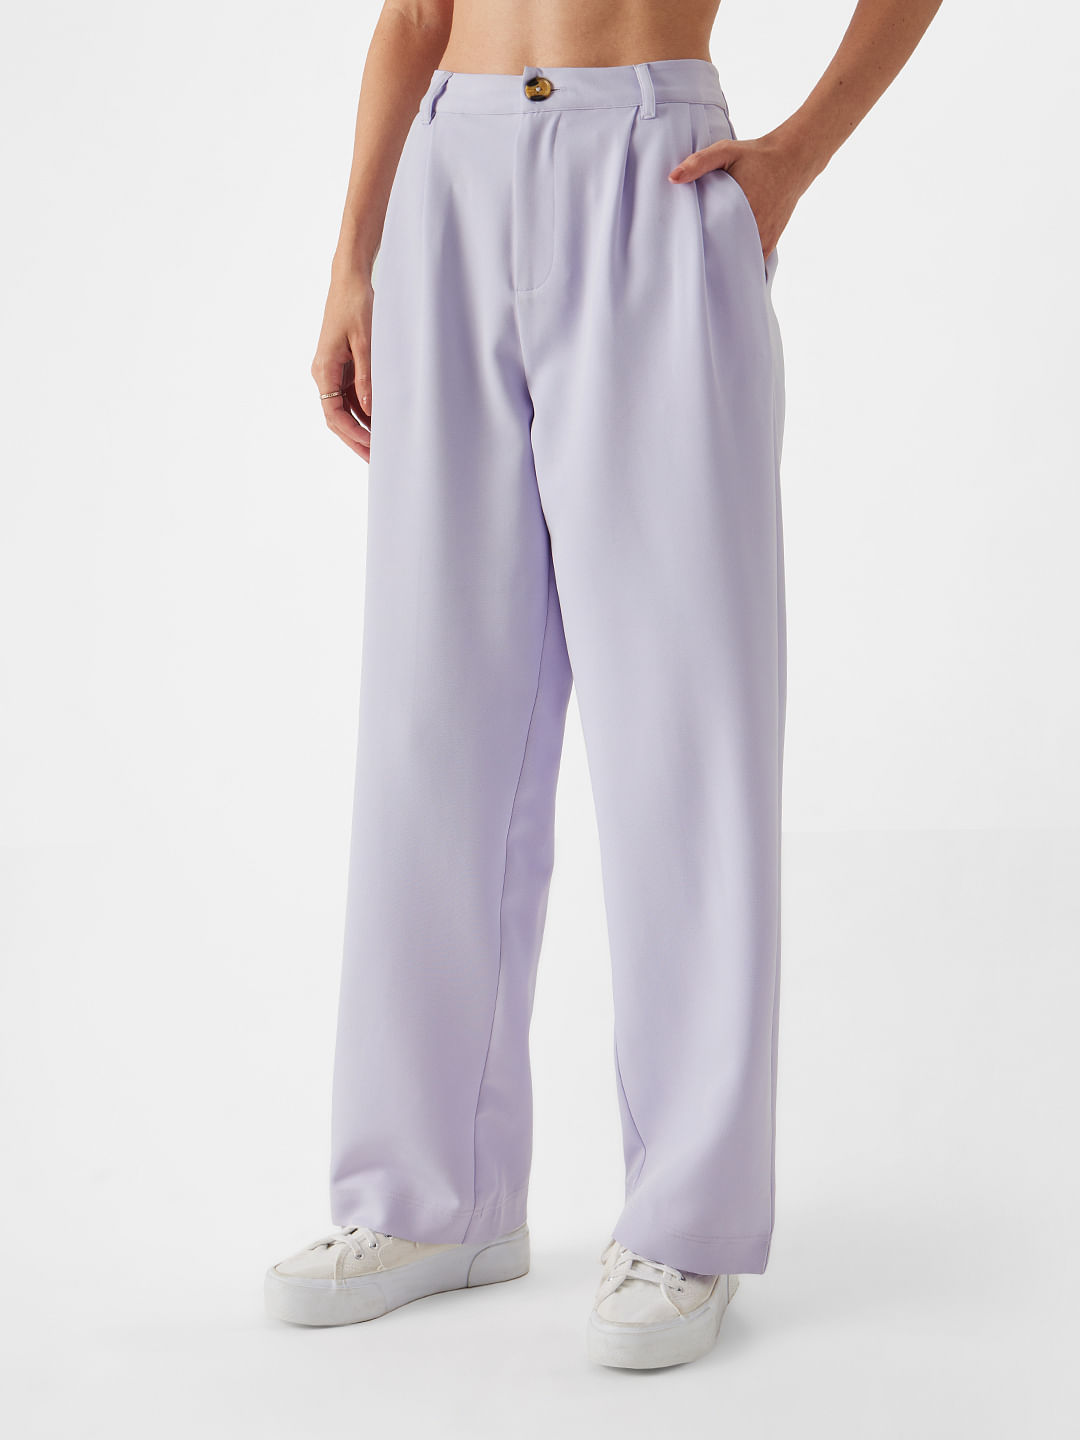 Buy Solids: Lavender Women Pants Online